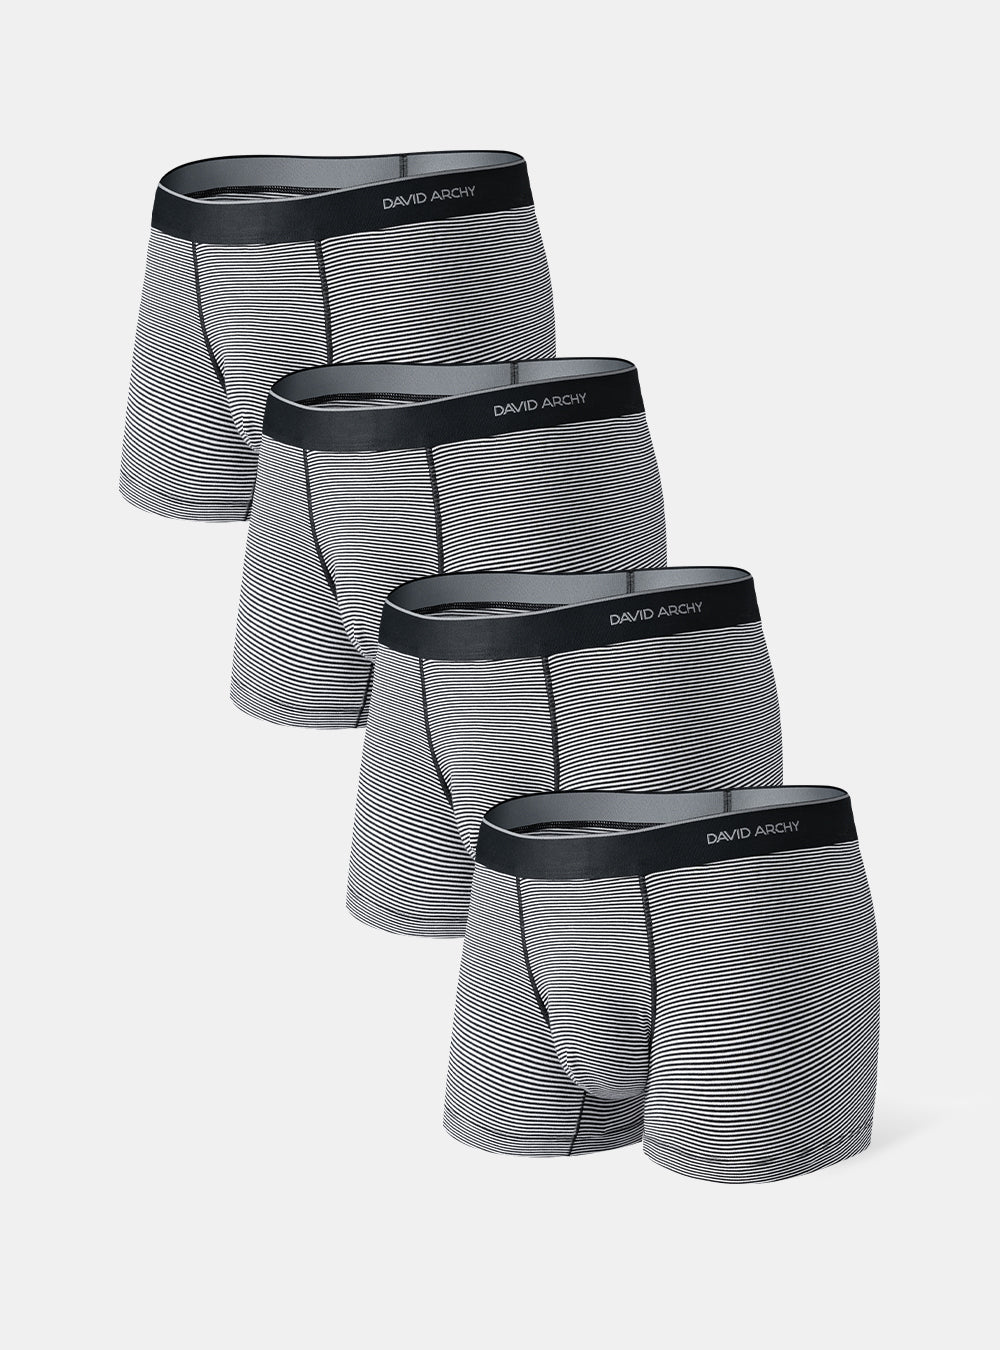 4 Packs Bamboo Rayon Trunks Underwear